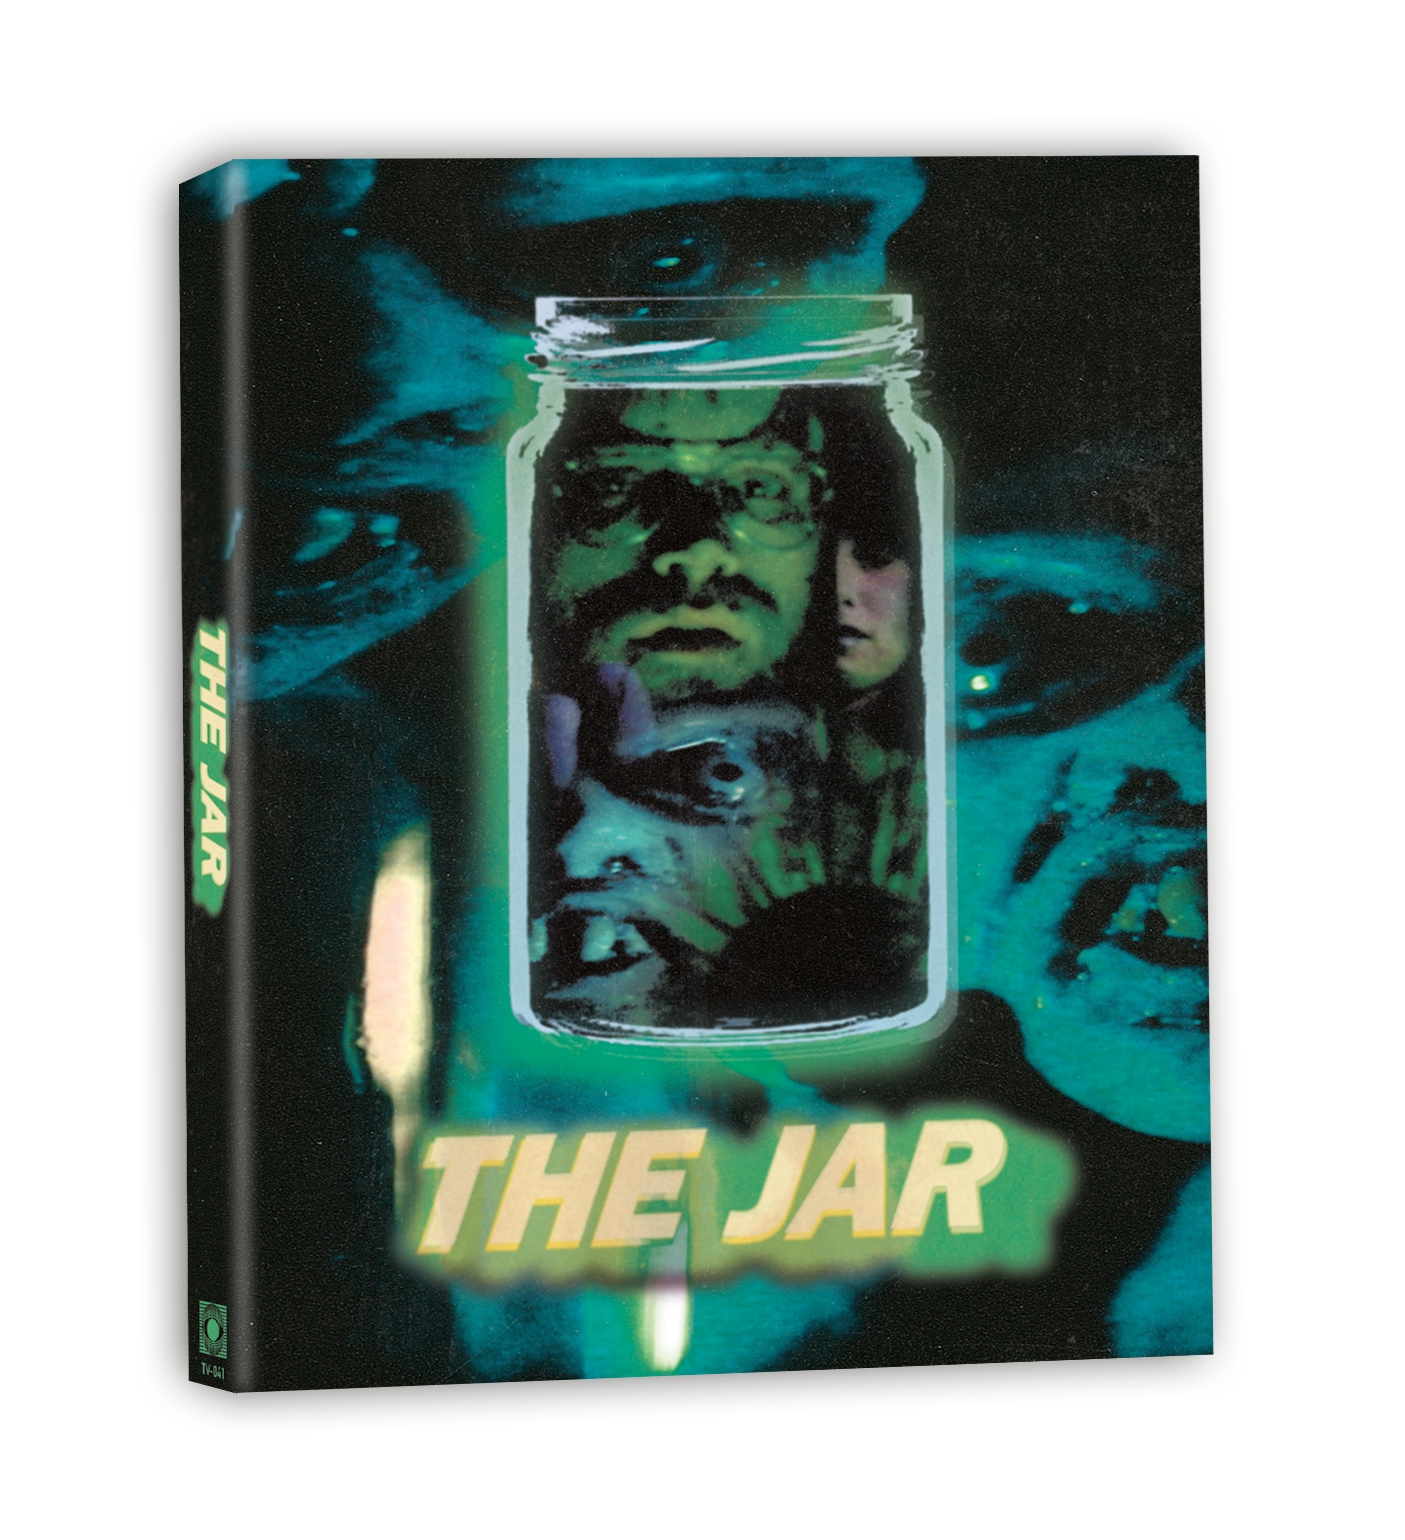 The Jar / Charon (1984) Blu-ray with Slip